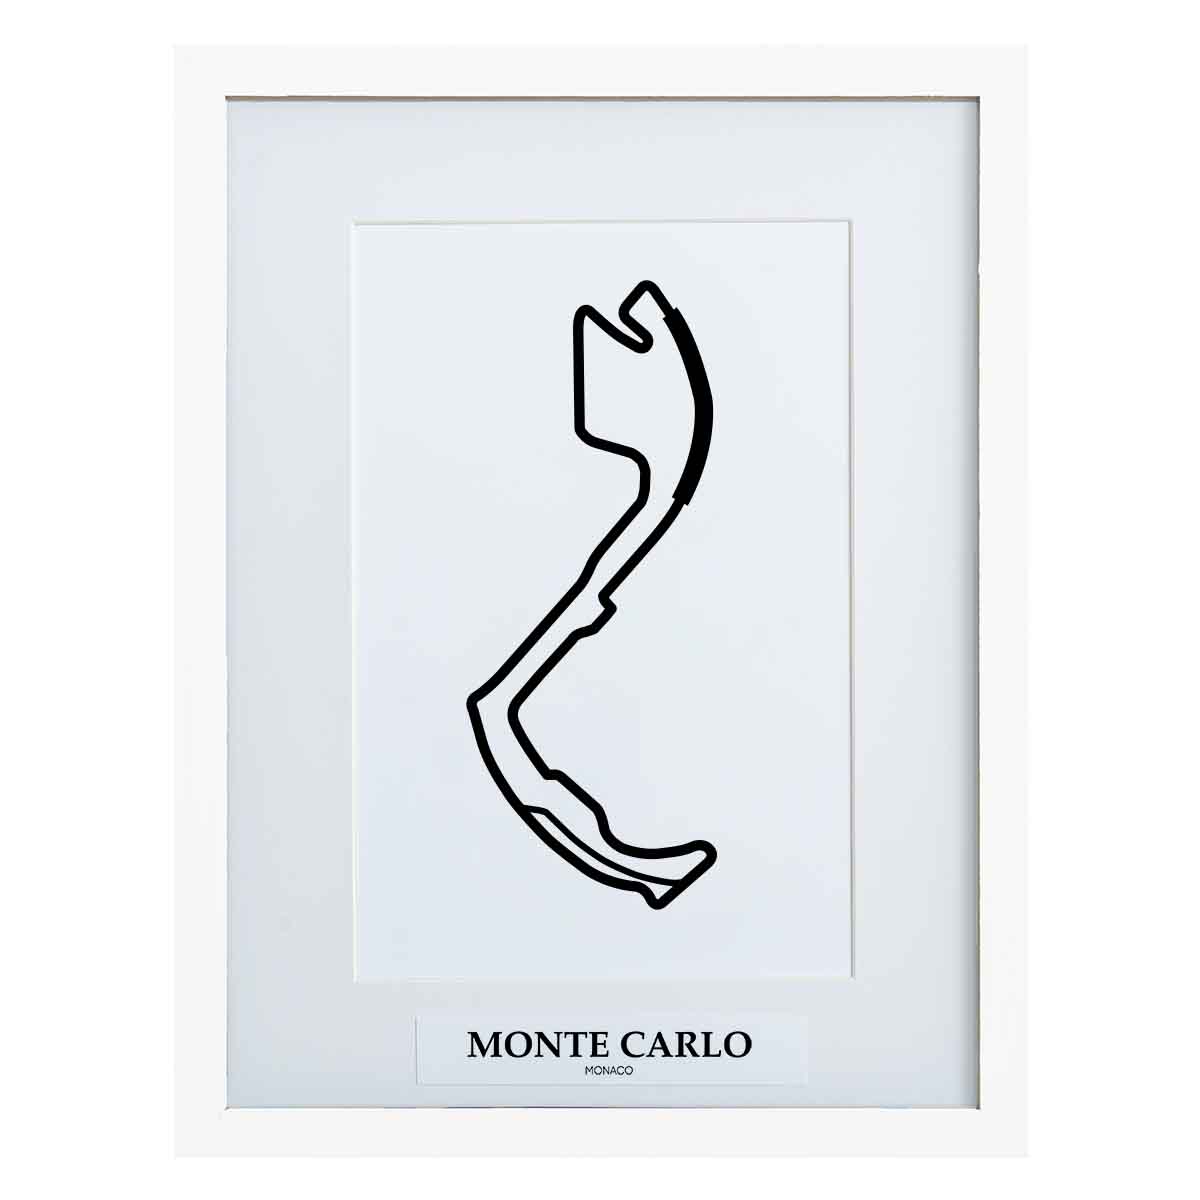 3D Circuit - Monte Carlo